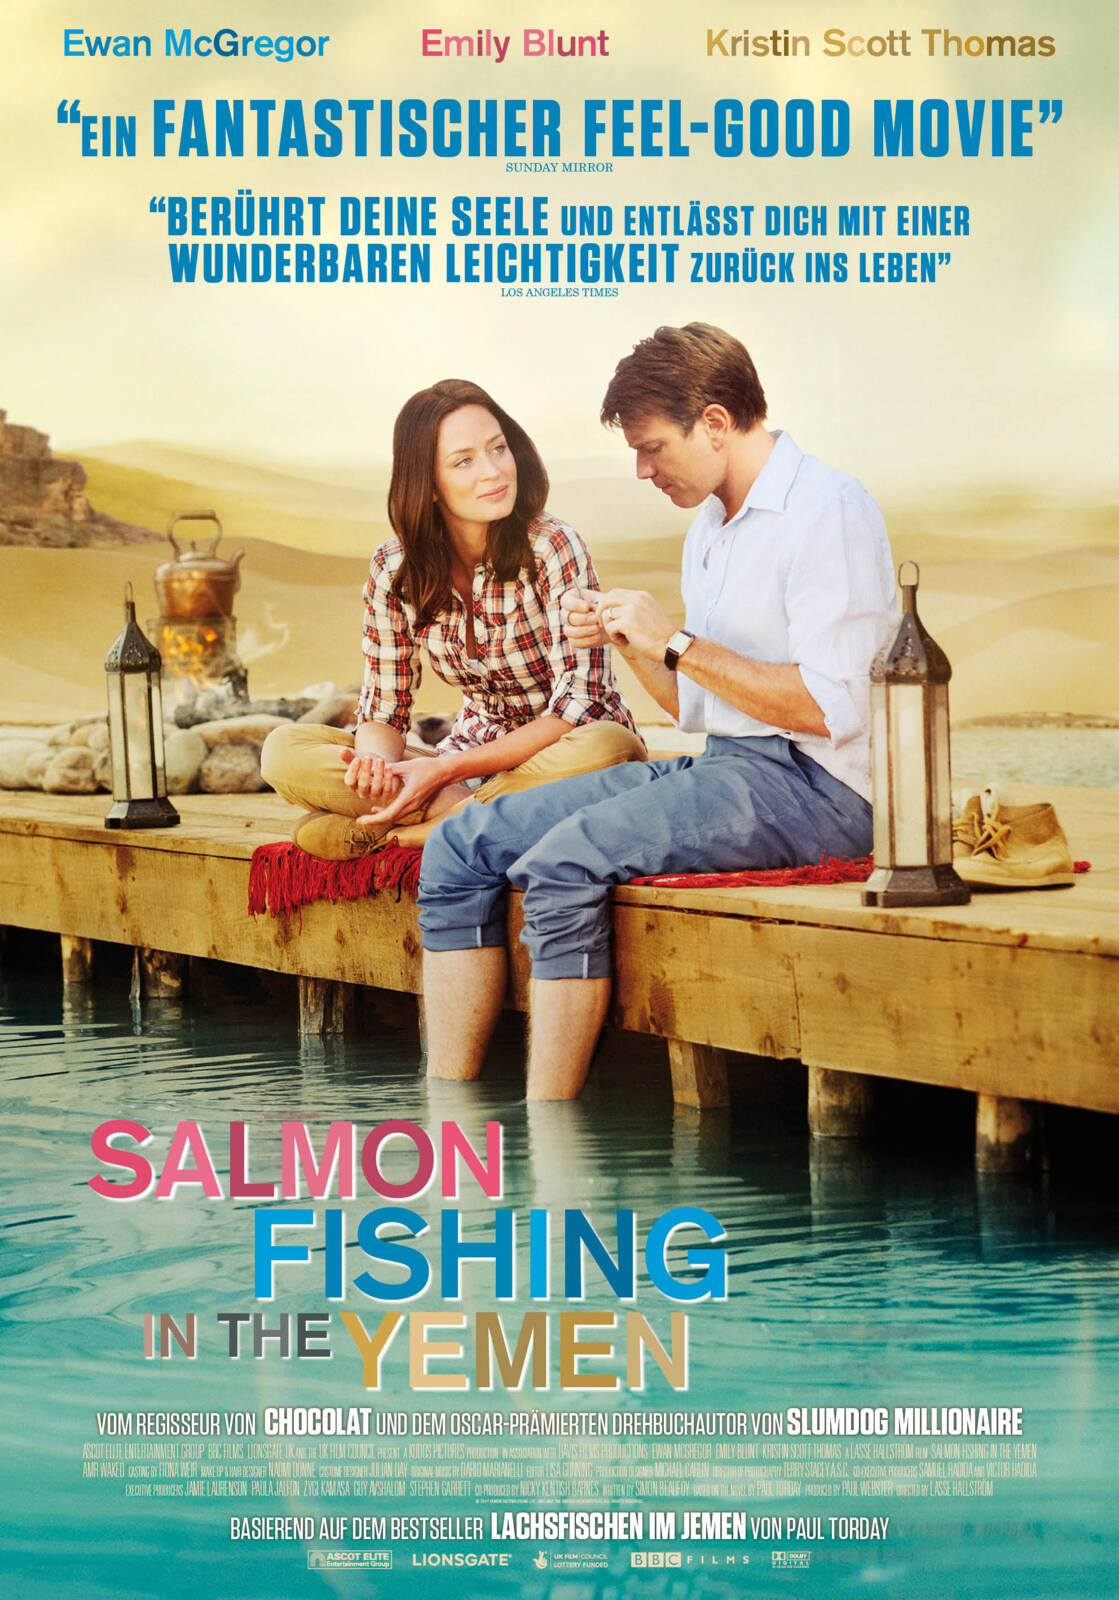 SALMON FISHING IN The Yemen (R-4 DVD) Emily Blunt Kristin Scott Thomas  $7.00 - PicClick AU